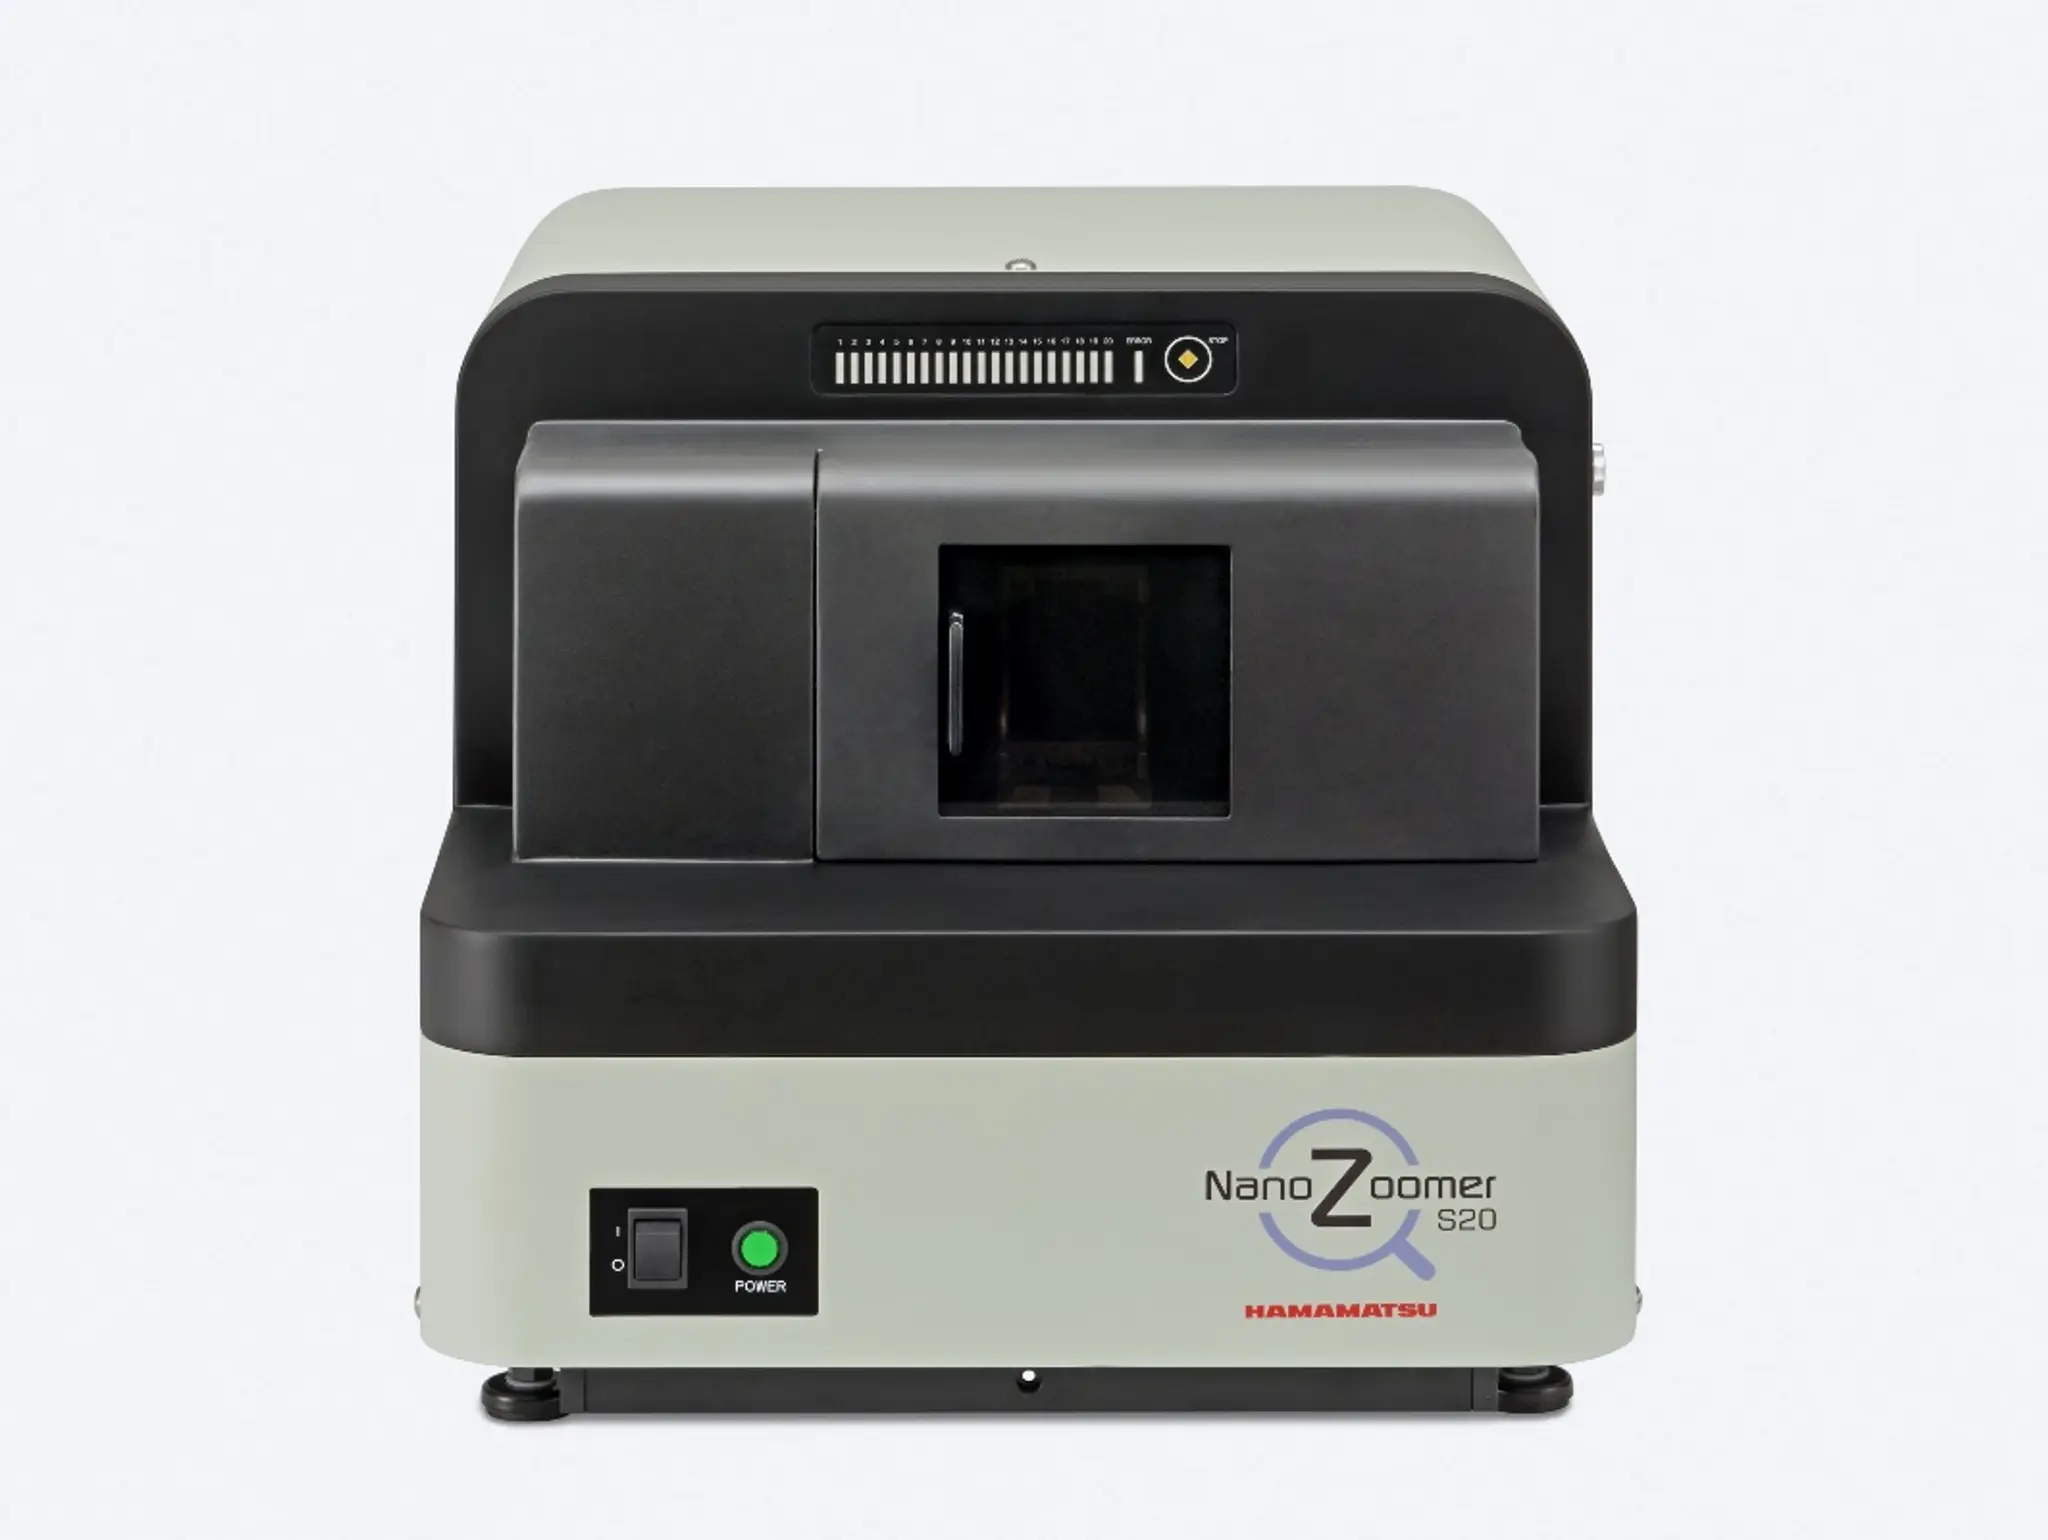  Experience the NanoZoomer S20 Digital Slide Scanner